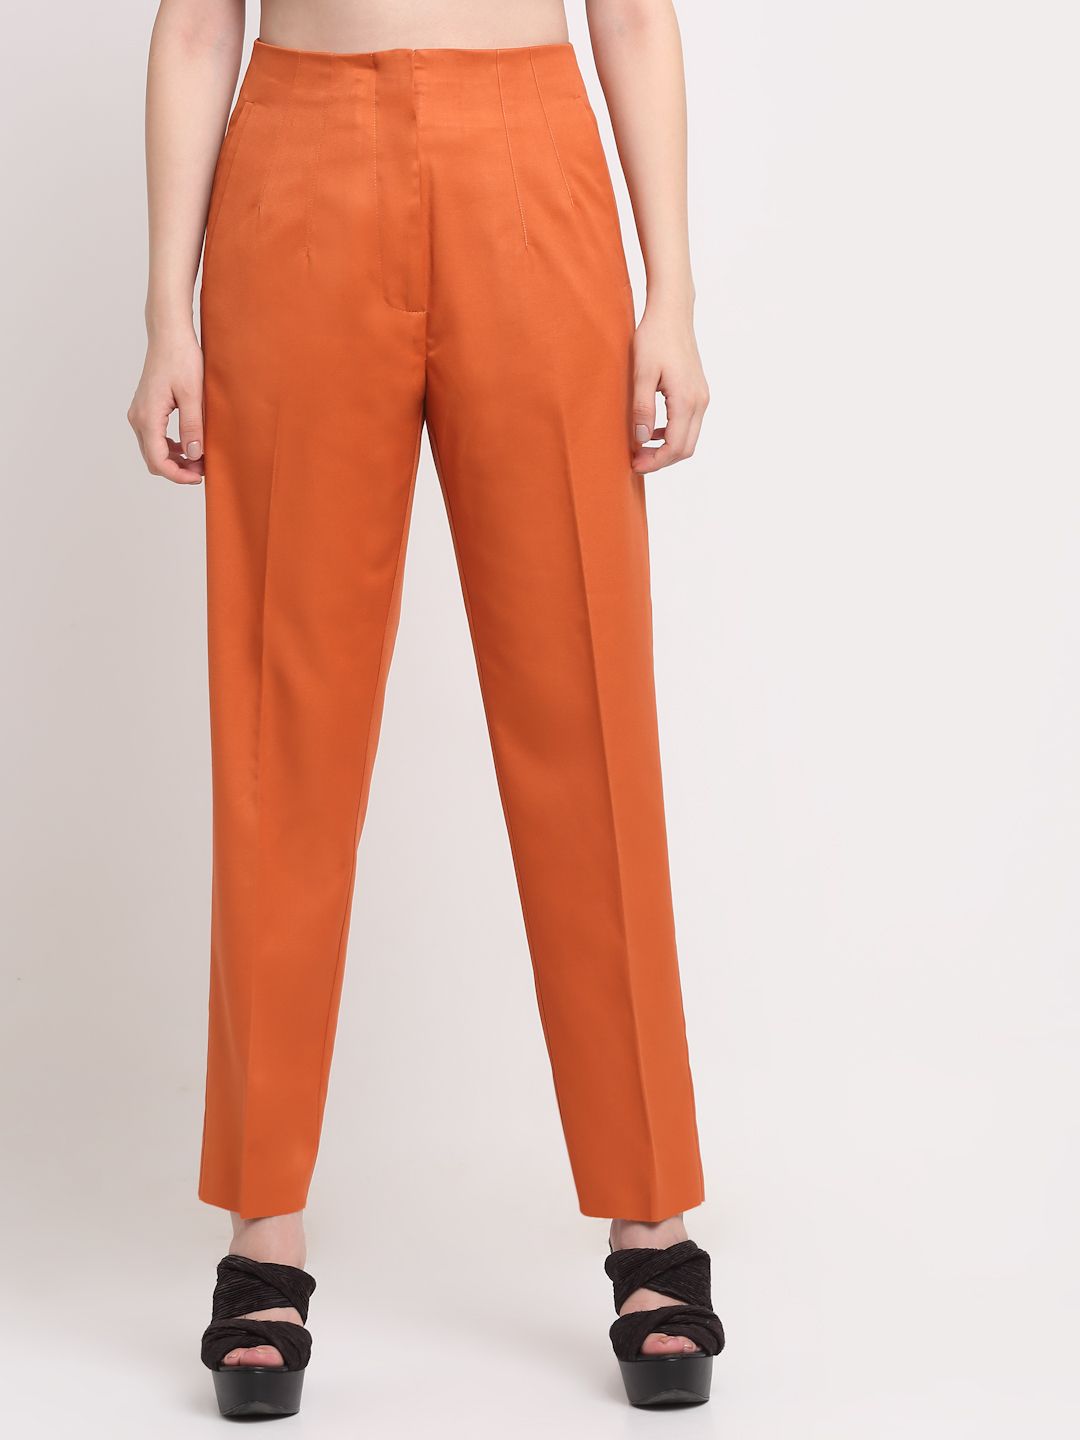 Women Viscose Lycra Solid Orange trousers